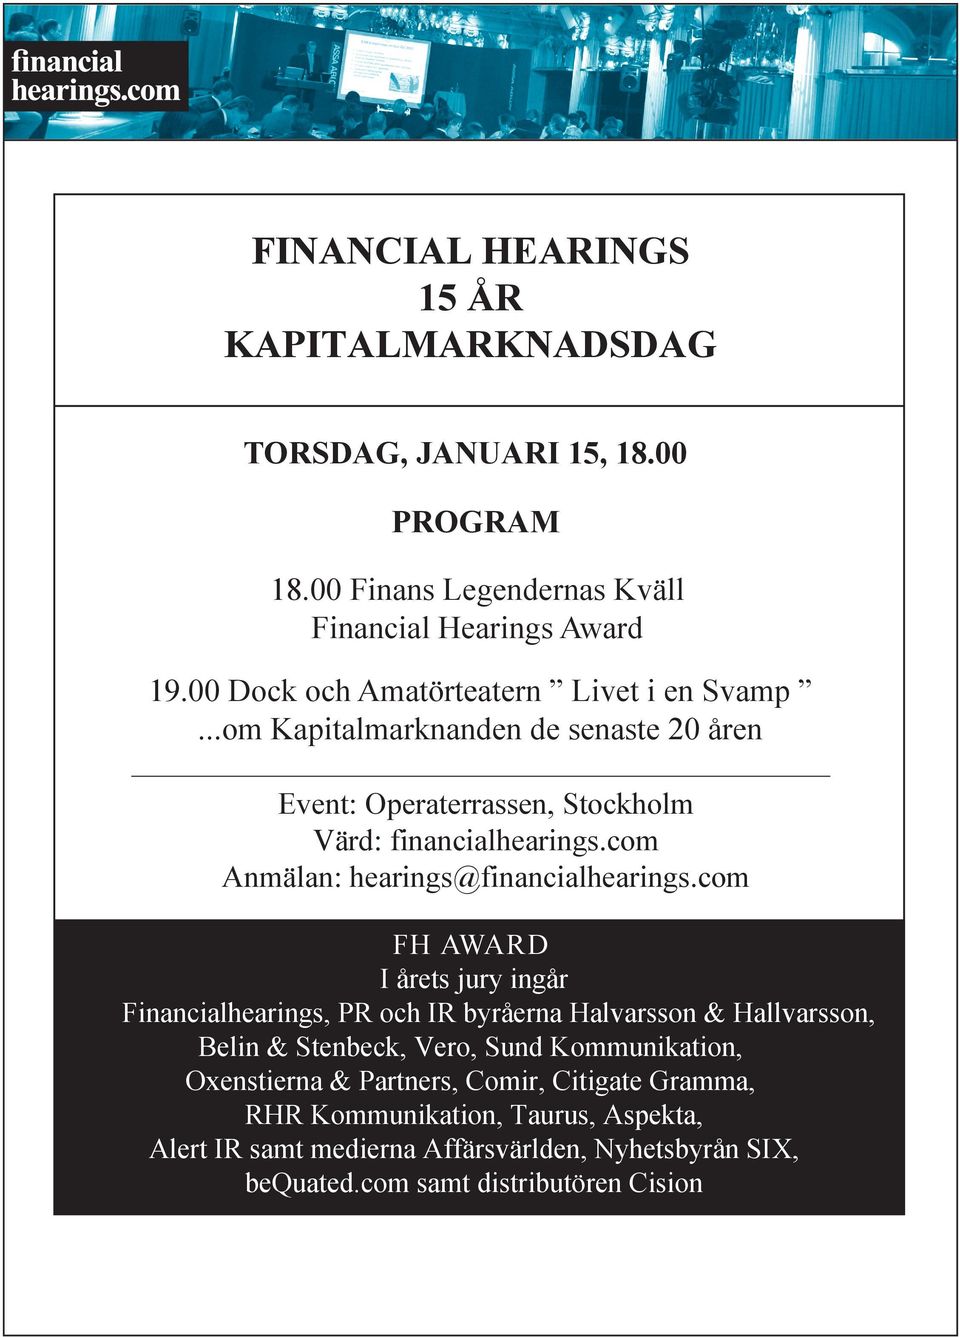 com Anmälan: hearings@financialhearings.